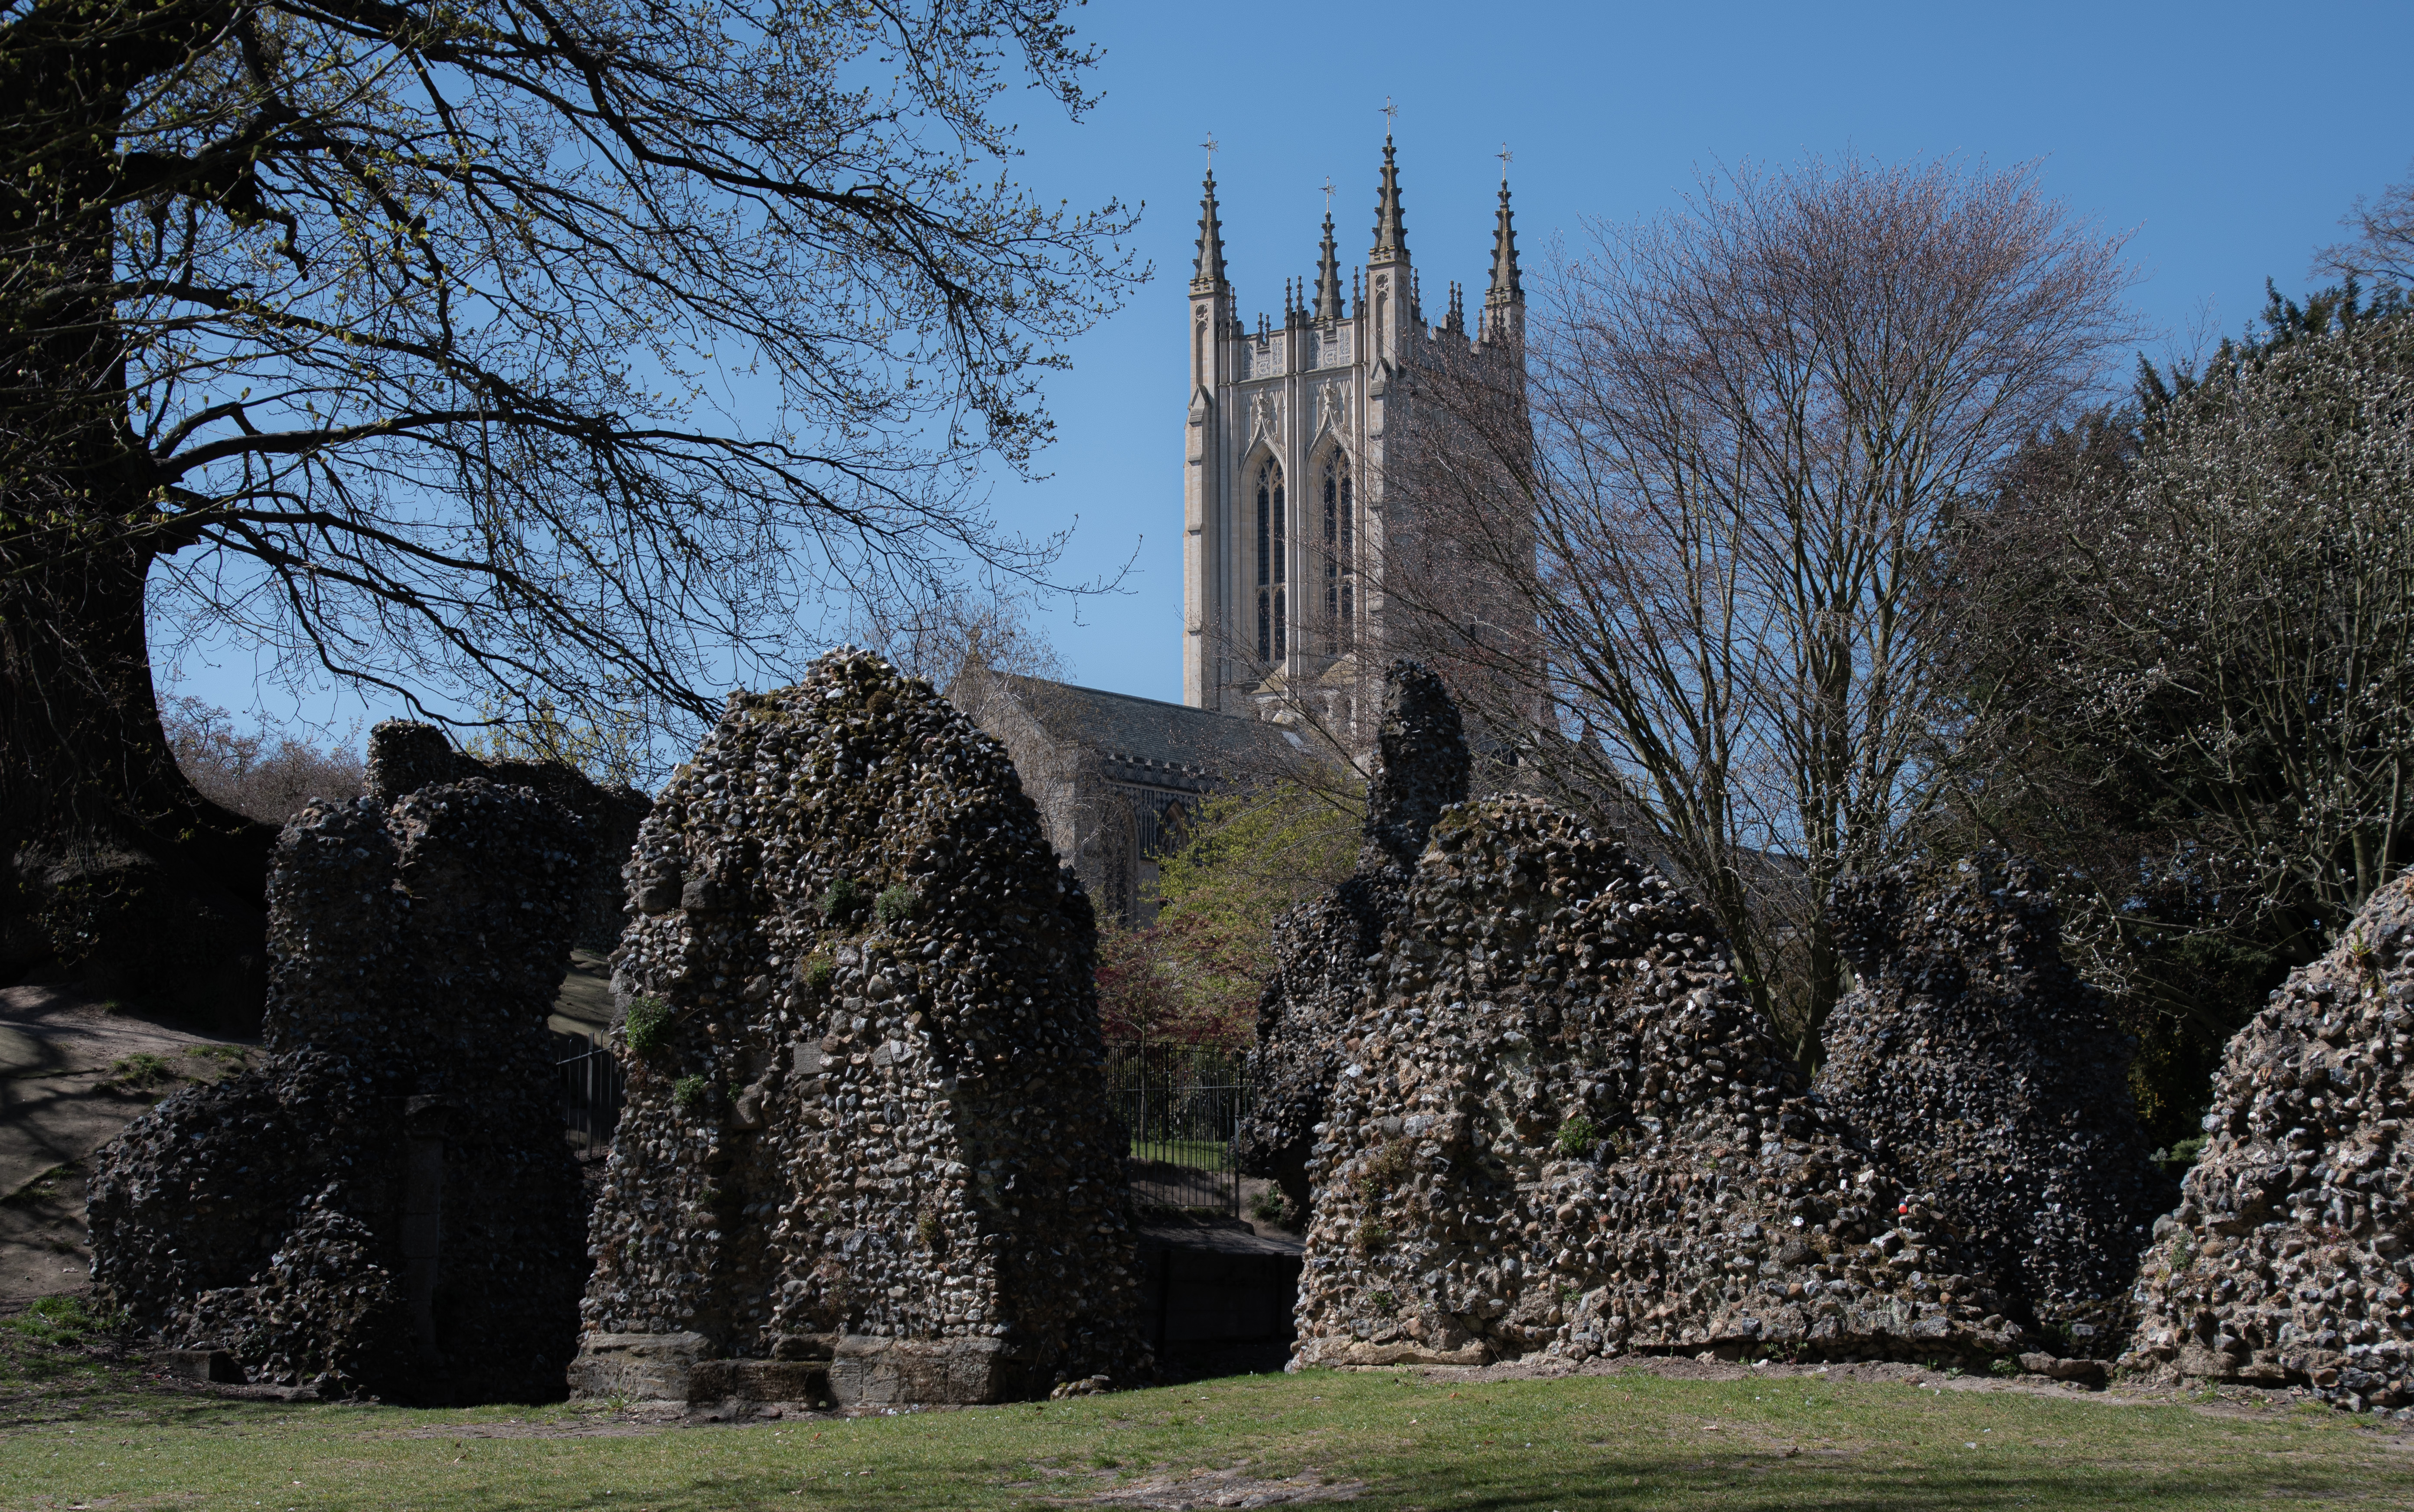 April: St. Edmundsbury Cathedral & Ruins